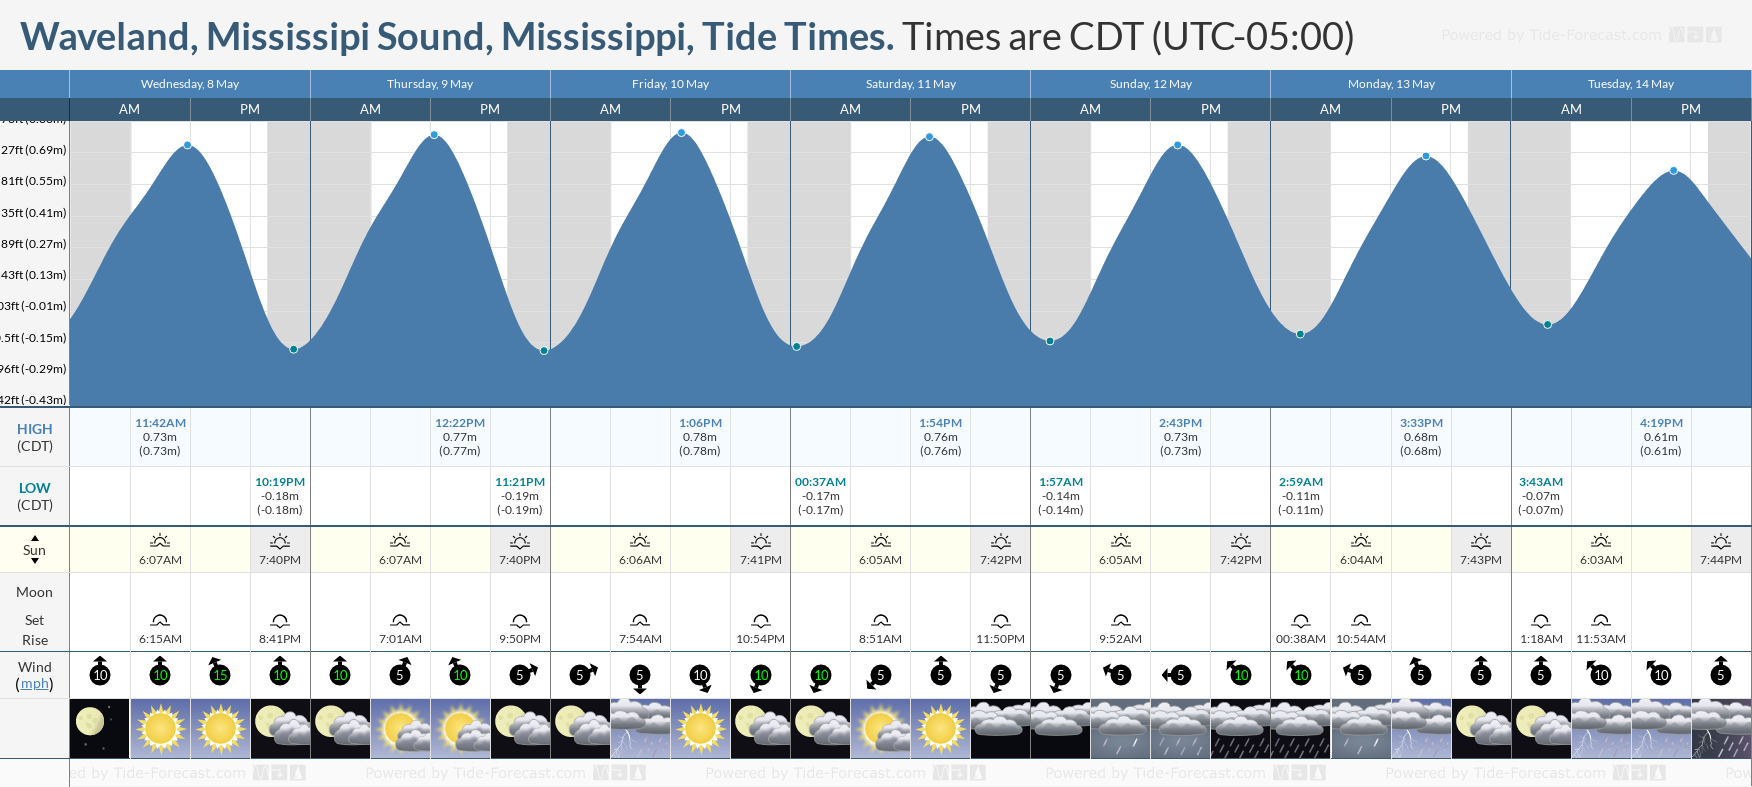 Waveland, Mississipi Sound, Mississippi Tide Chart including high and low tide tide times for the next 7 days